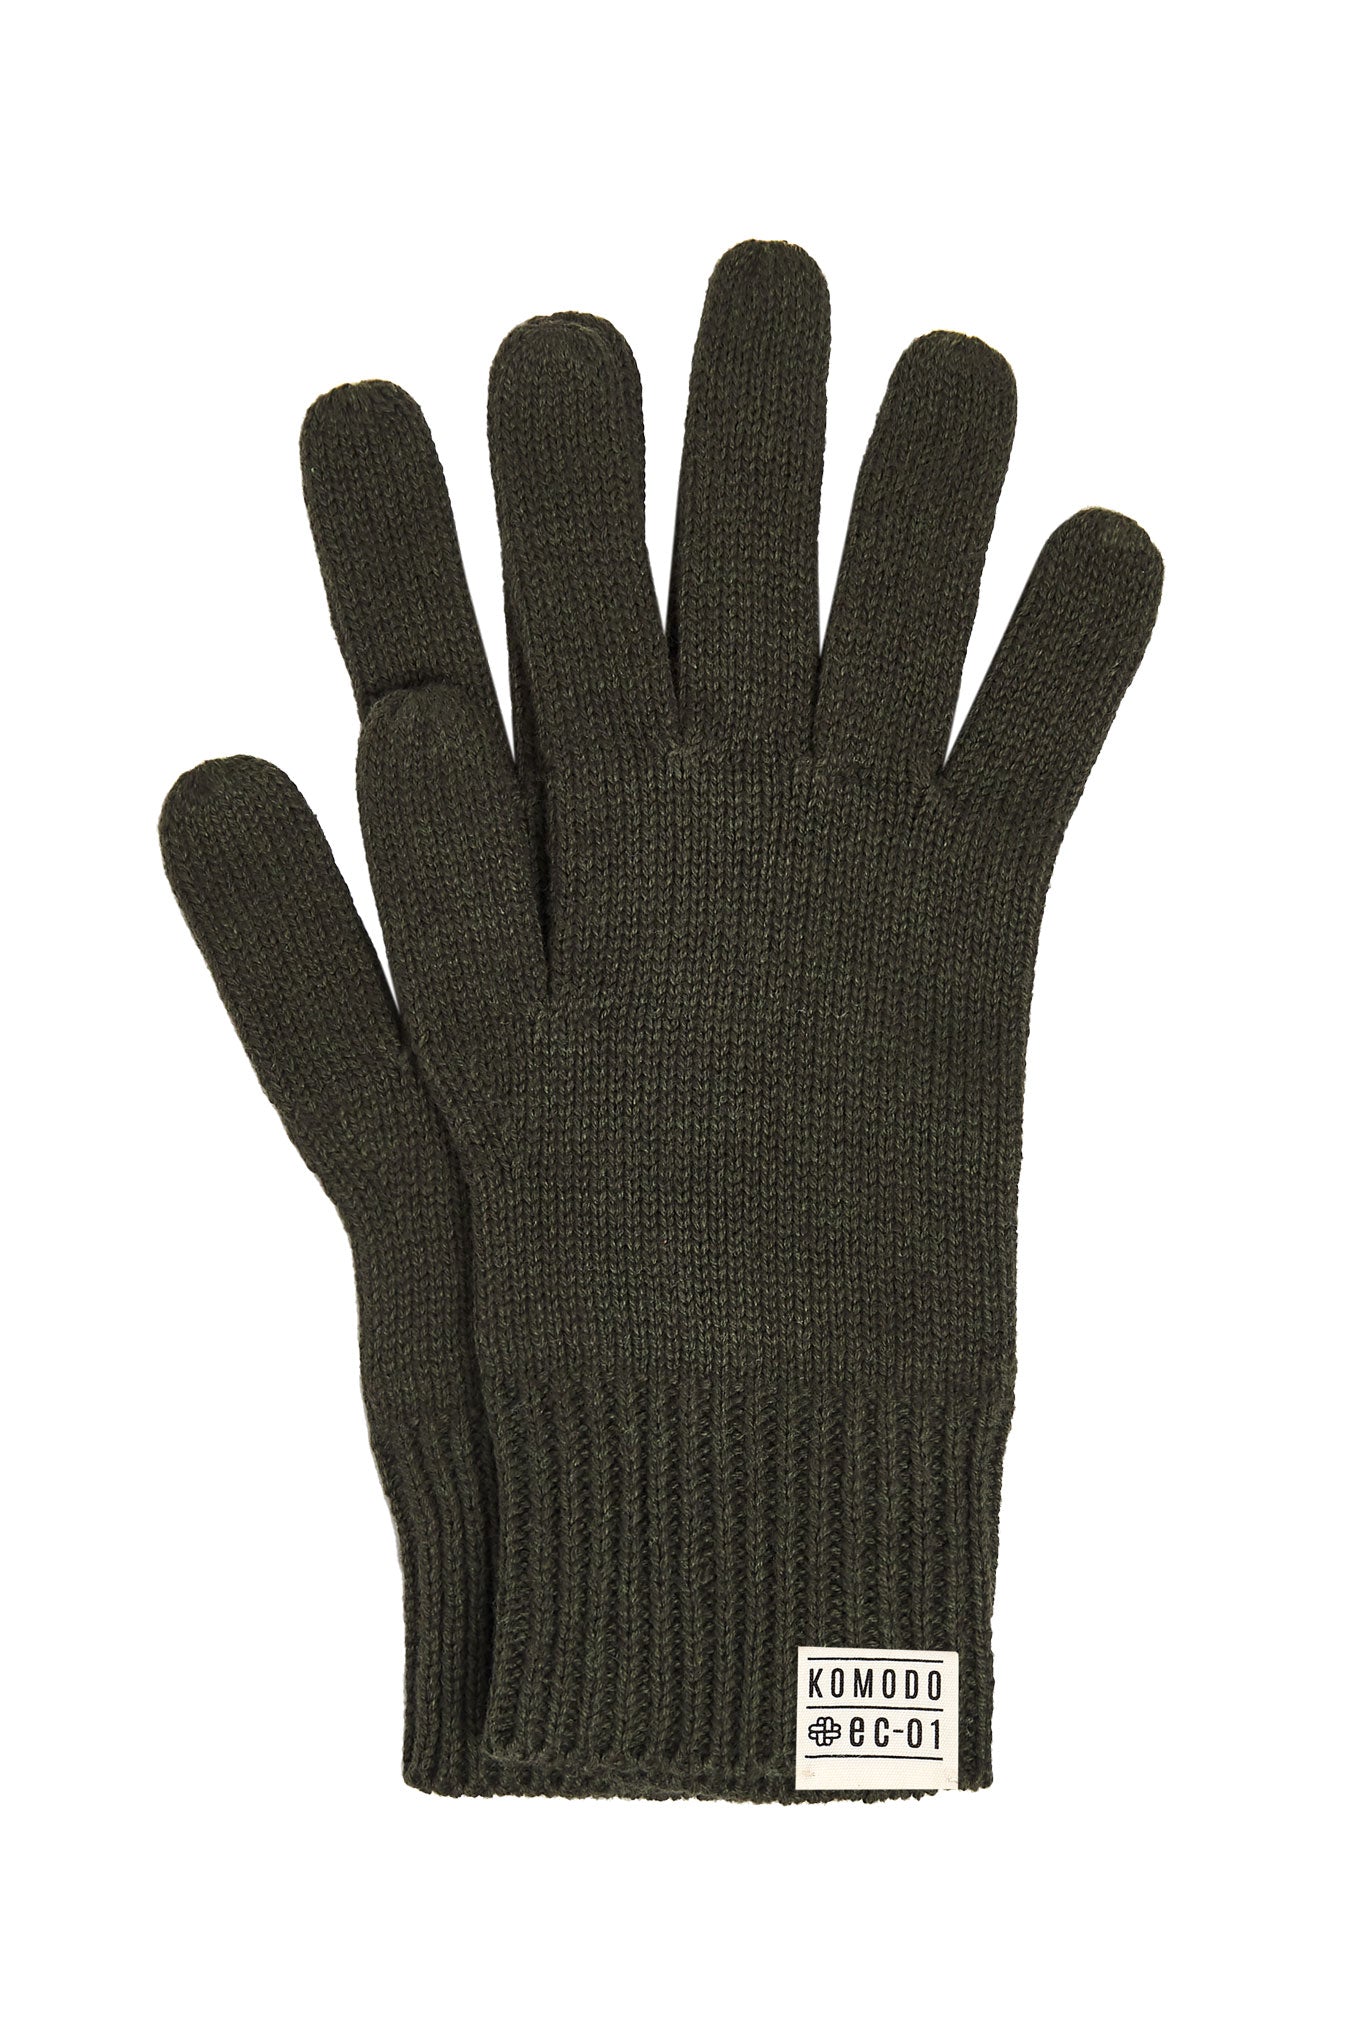 Komodo Naie Gloves in Dark Khaki